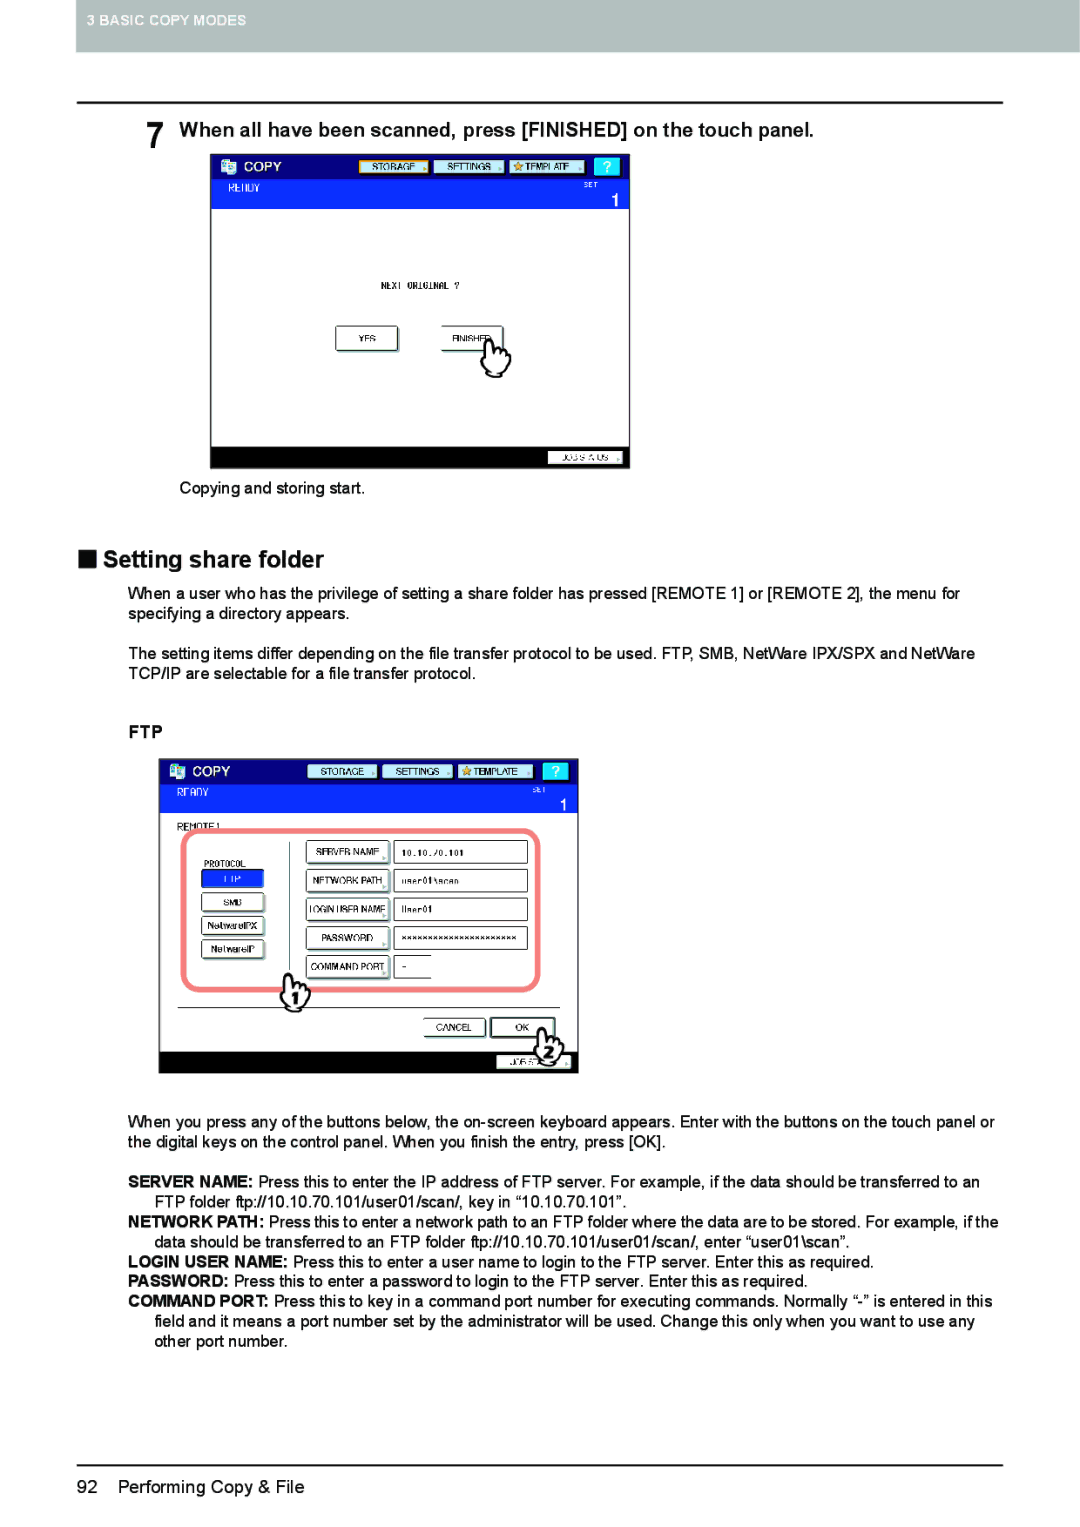 Toshiba 6520c, e-STUDIO5520C manual „ Setting share folder, Ftp 